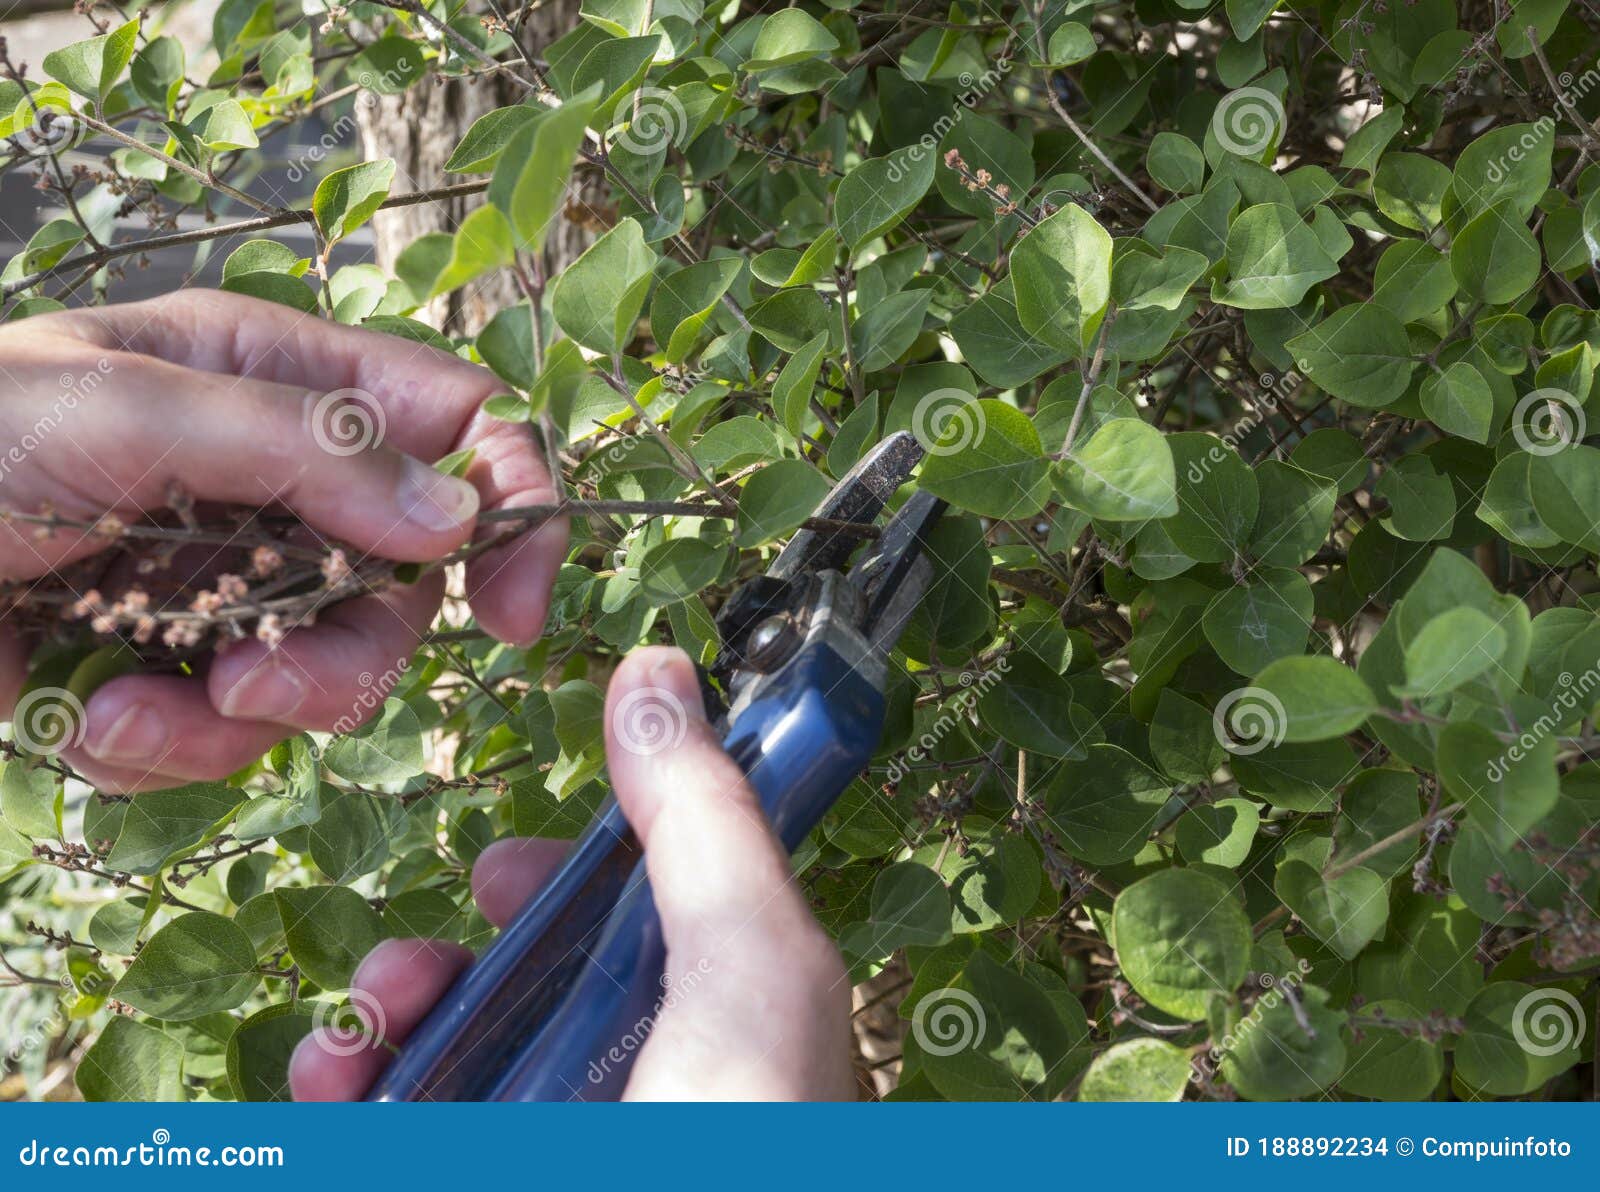 Removing lilac bushes, Davenport FL